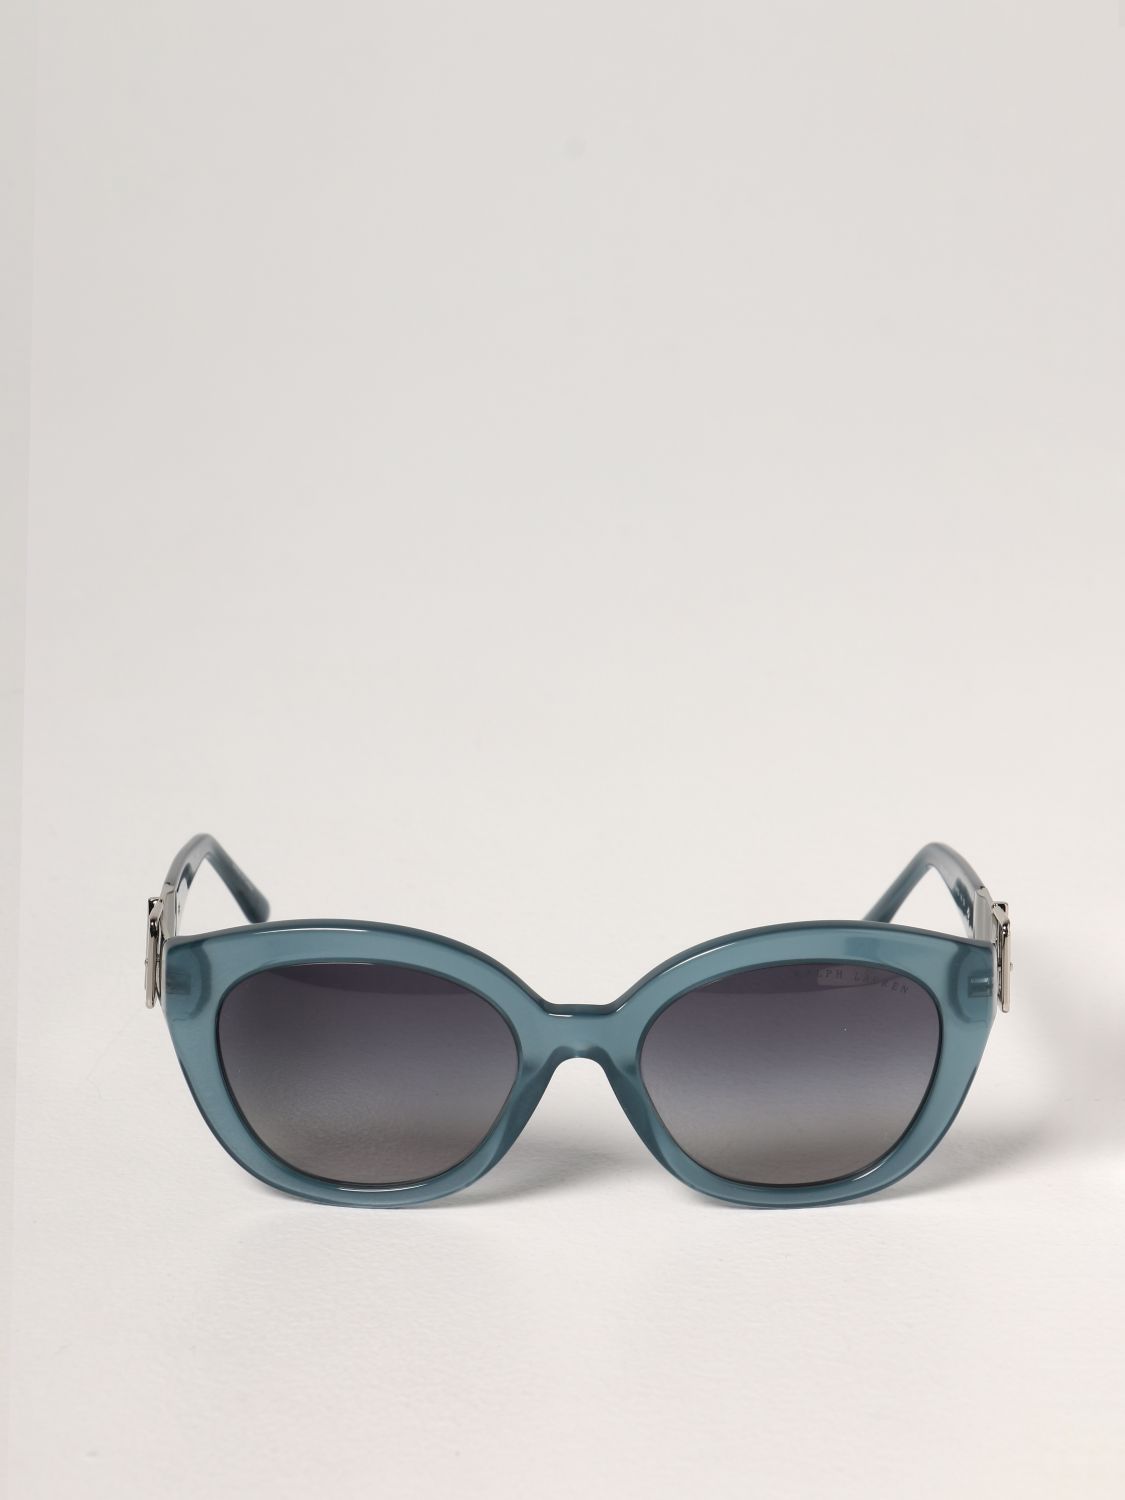 Glasses Ralph Lauren: Glasses women Ralph Lauren sky blue 2